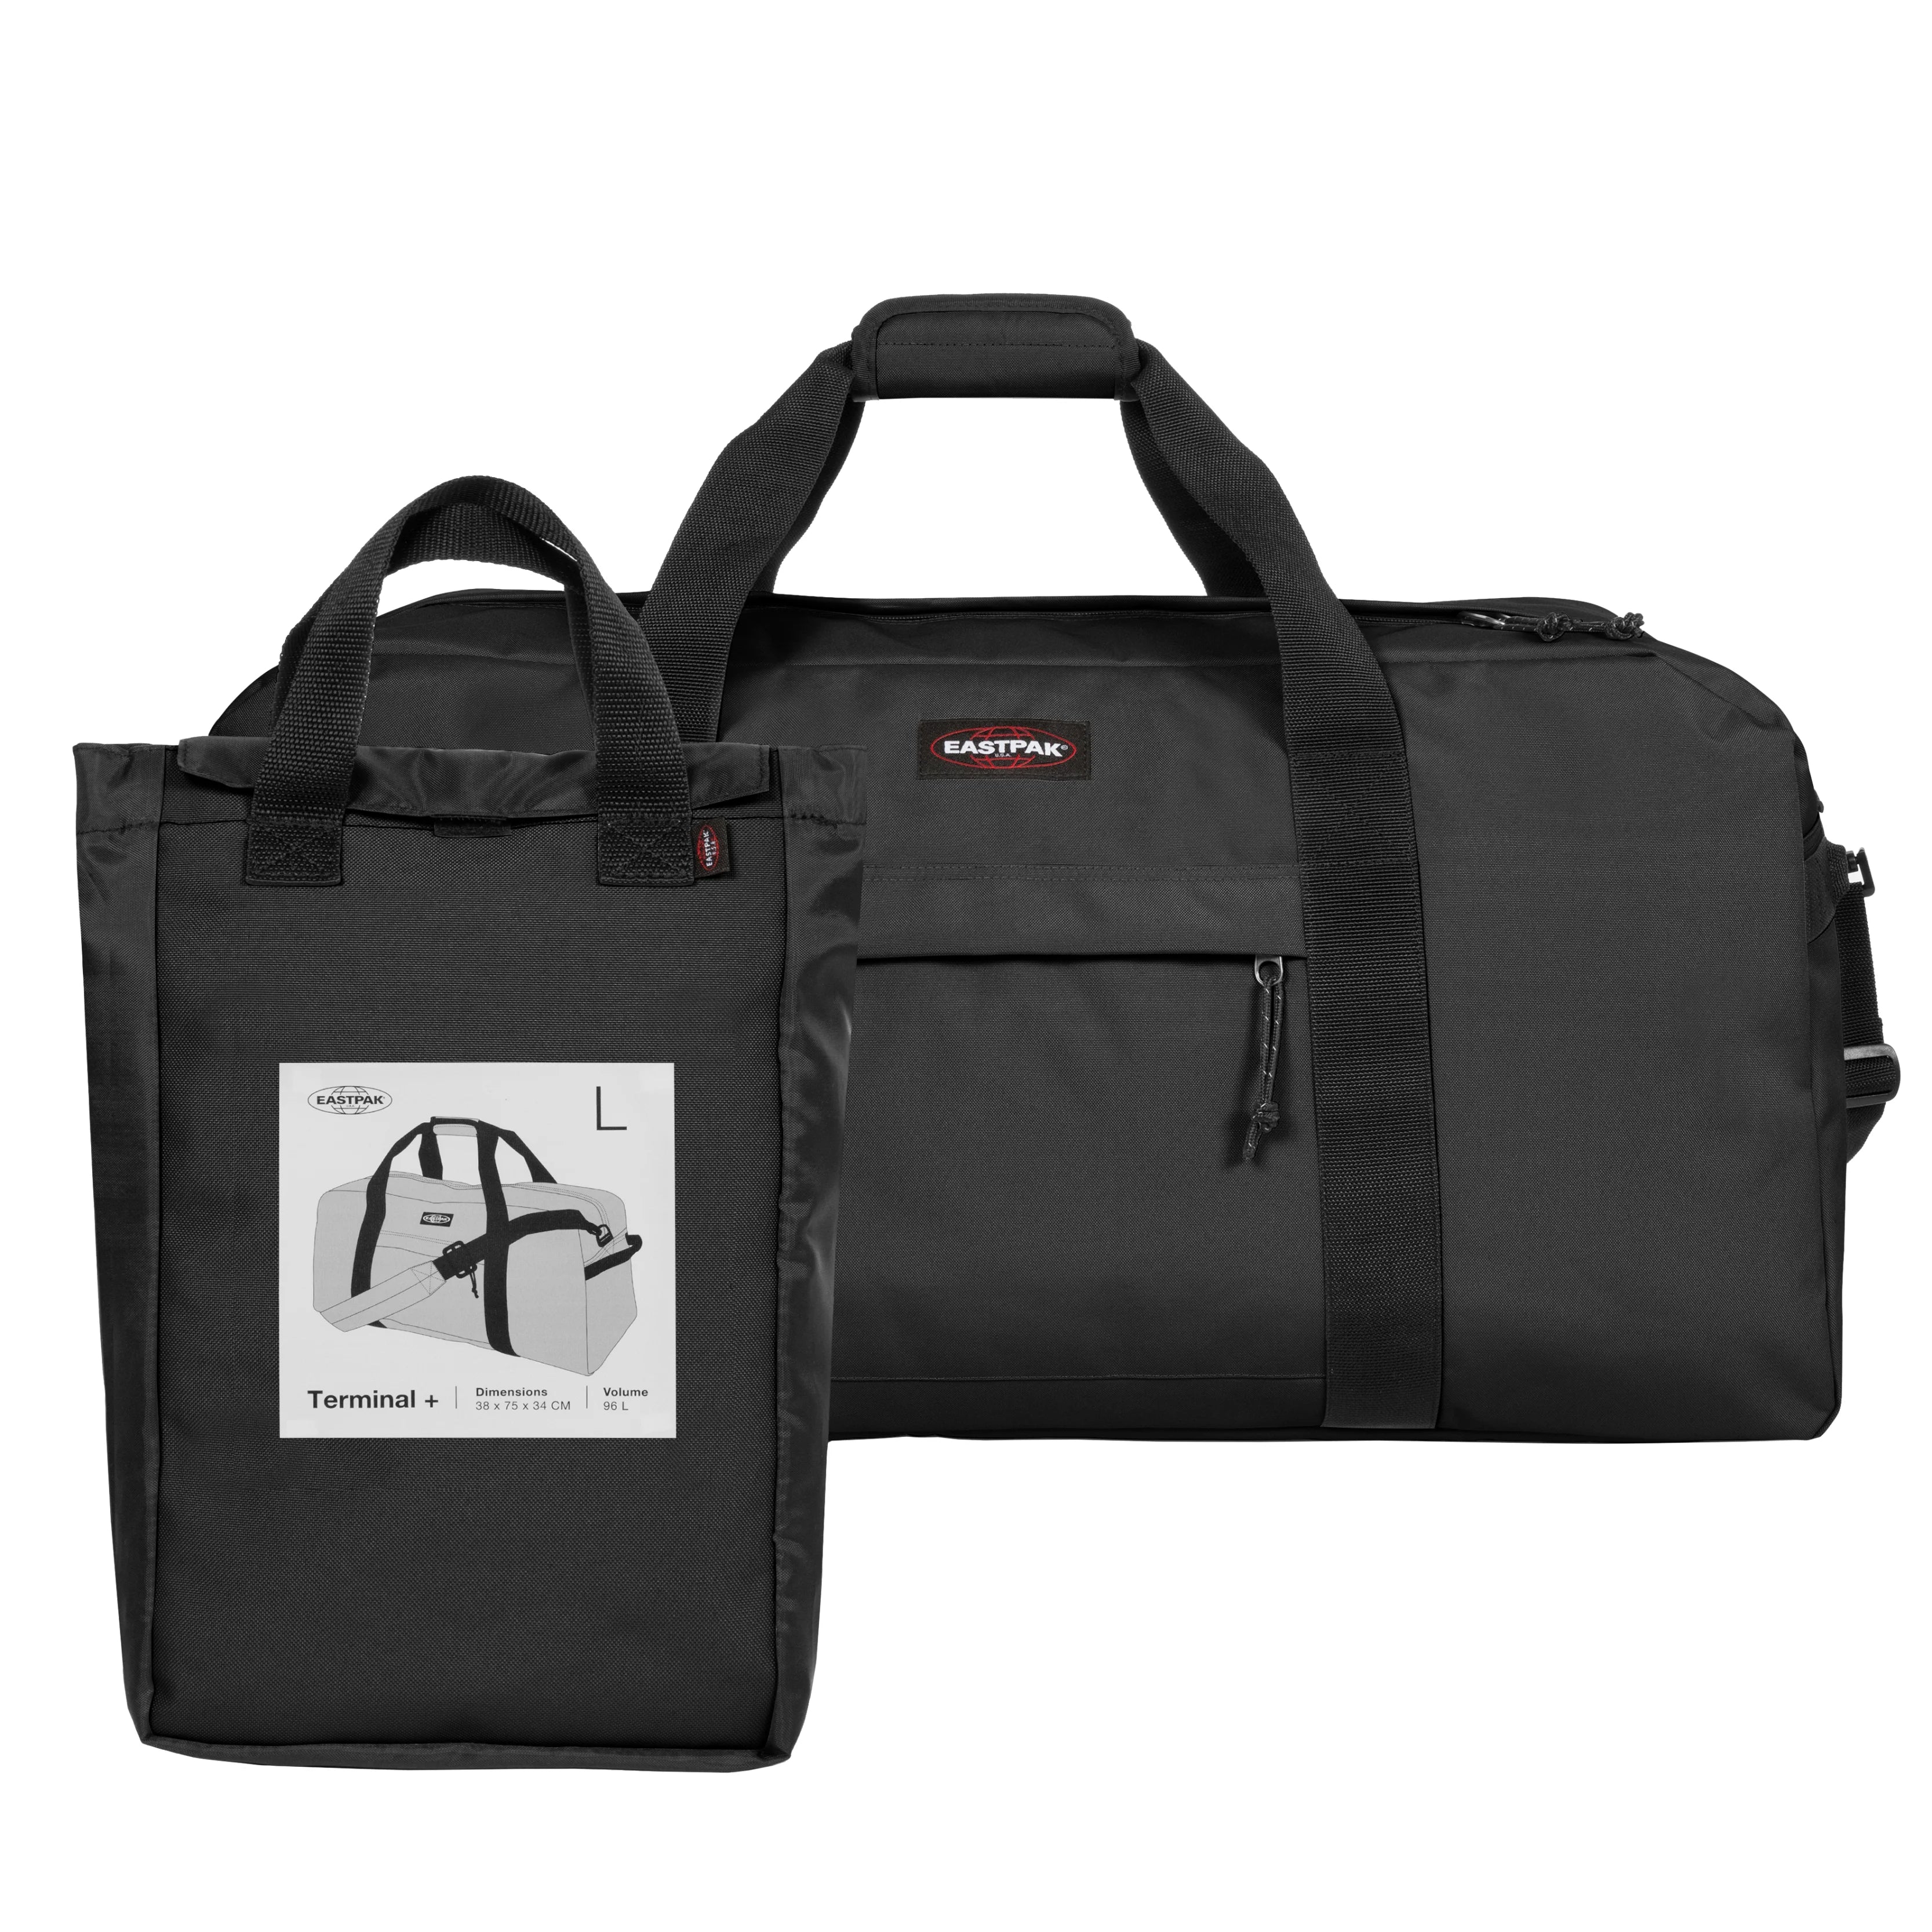 Eastpak Authentic Travel Terminal Plus travel bag 75 cm - black